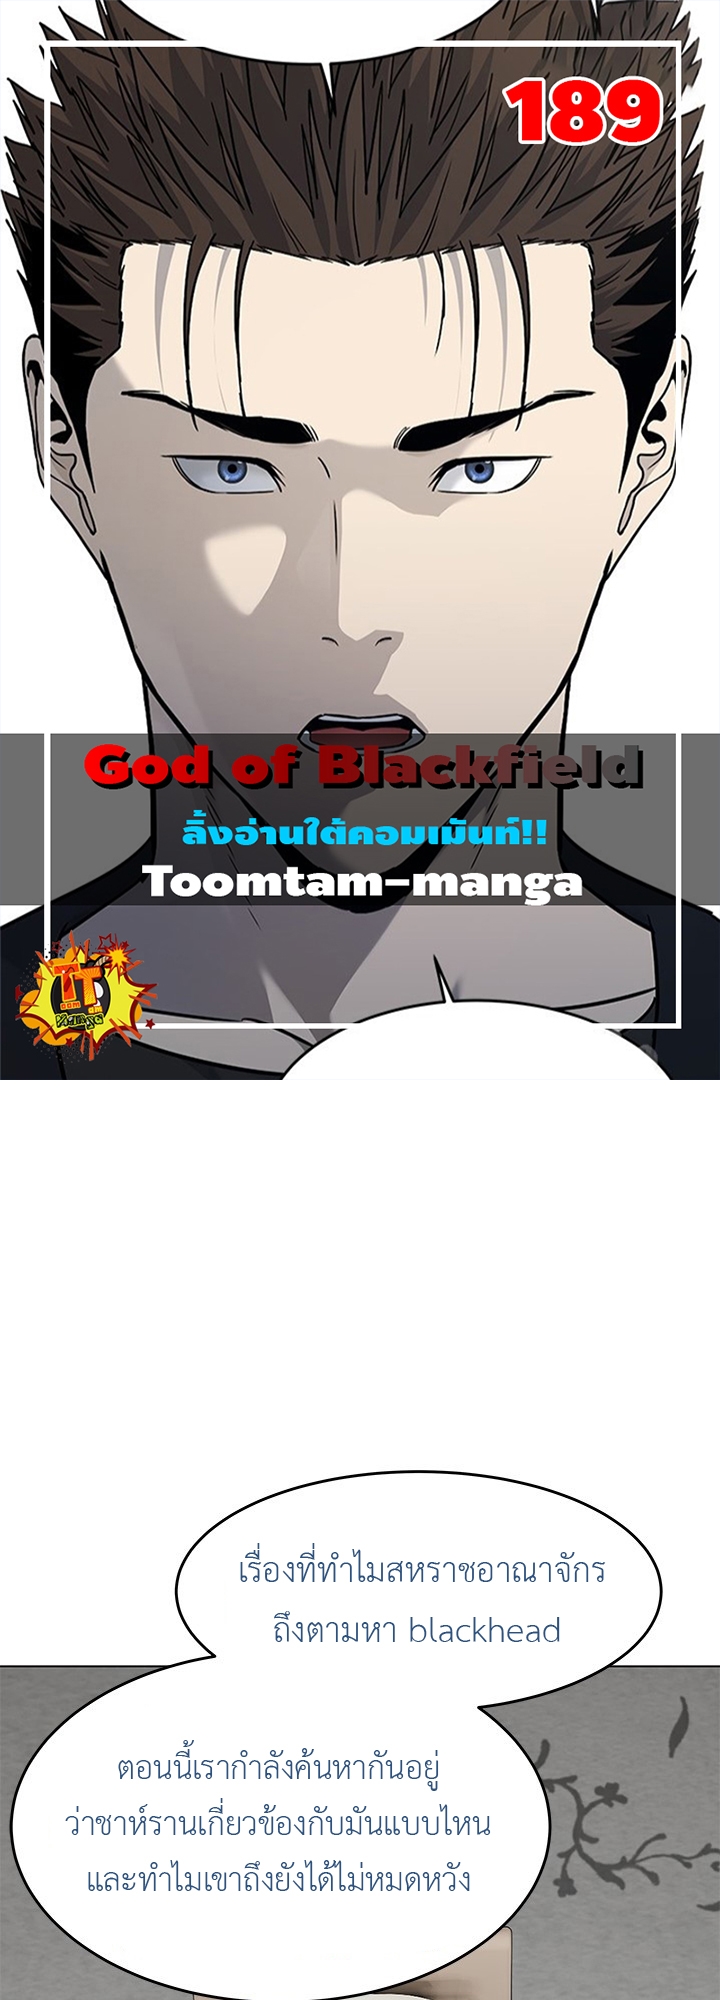 God of Blackfield 188 02 01 25670001